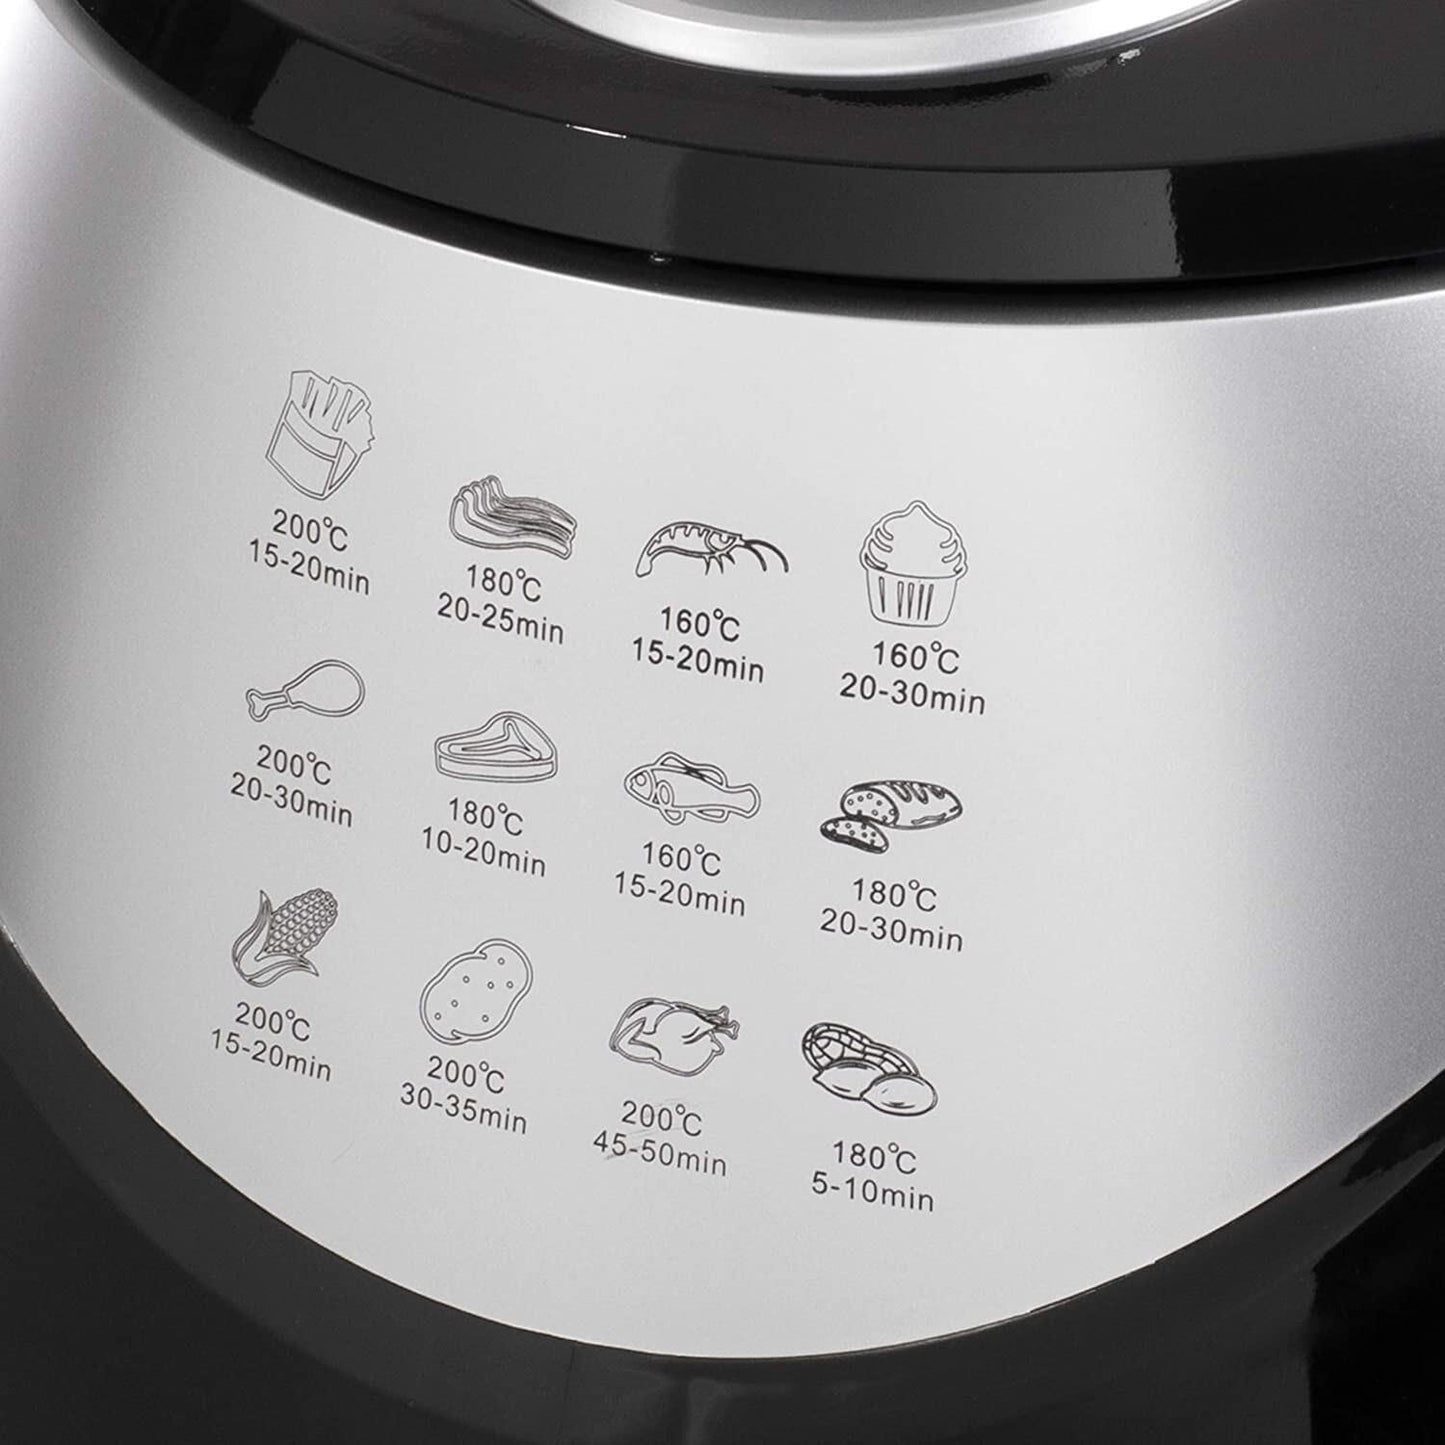 Daewoo 4 Litre Electric Digital Black Air Fryer With Timer & Temperature Control  (SDA1861)